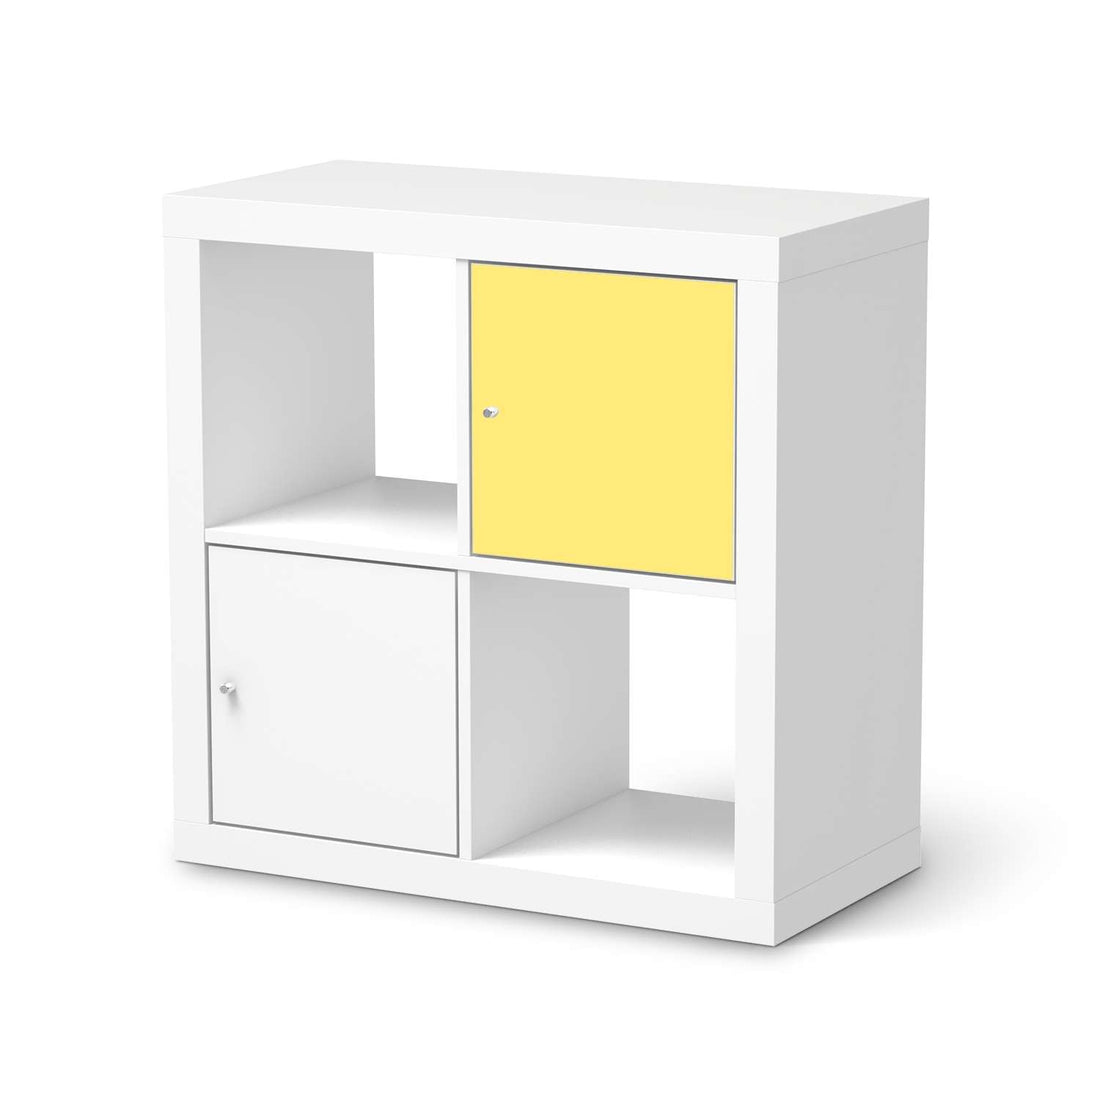 Selbstklebende Folie Gelb Light - IKEA Kallax Regal 1 Türe  - weiss